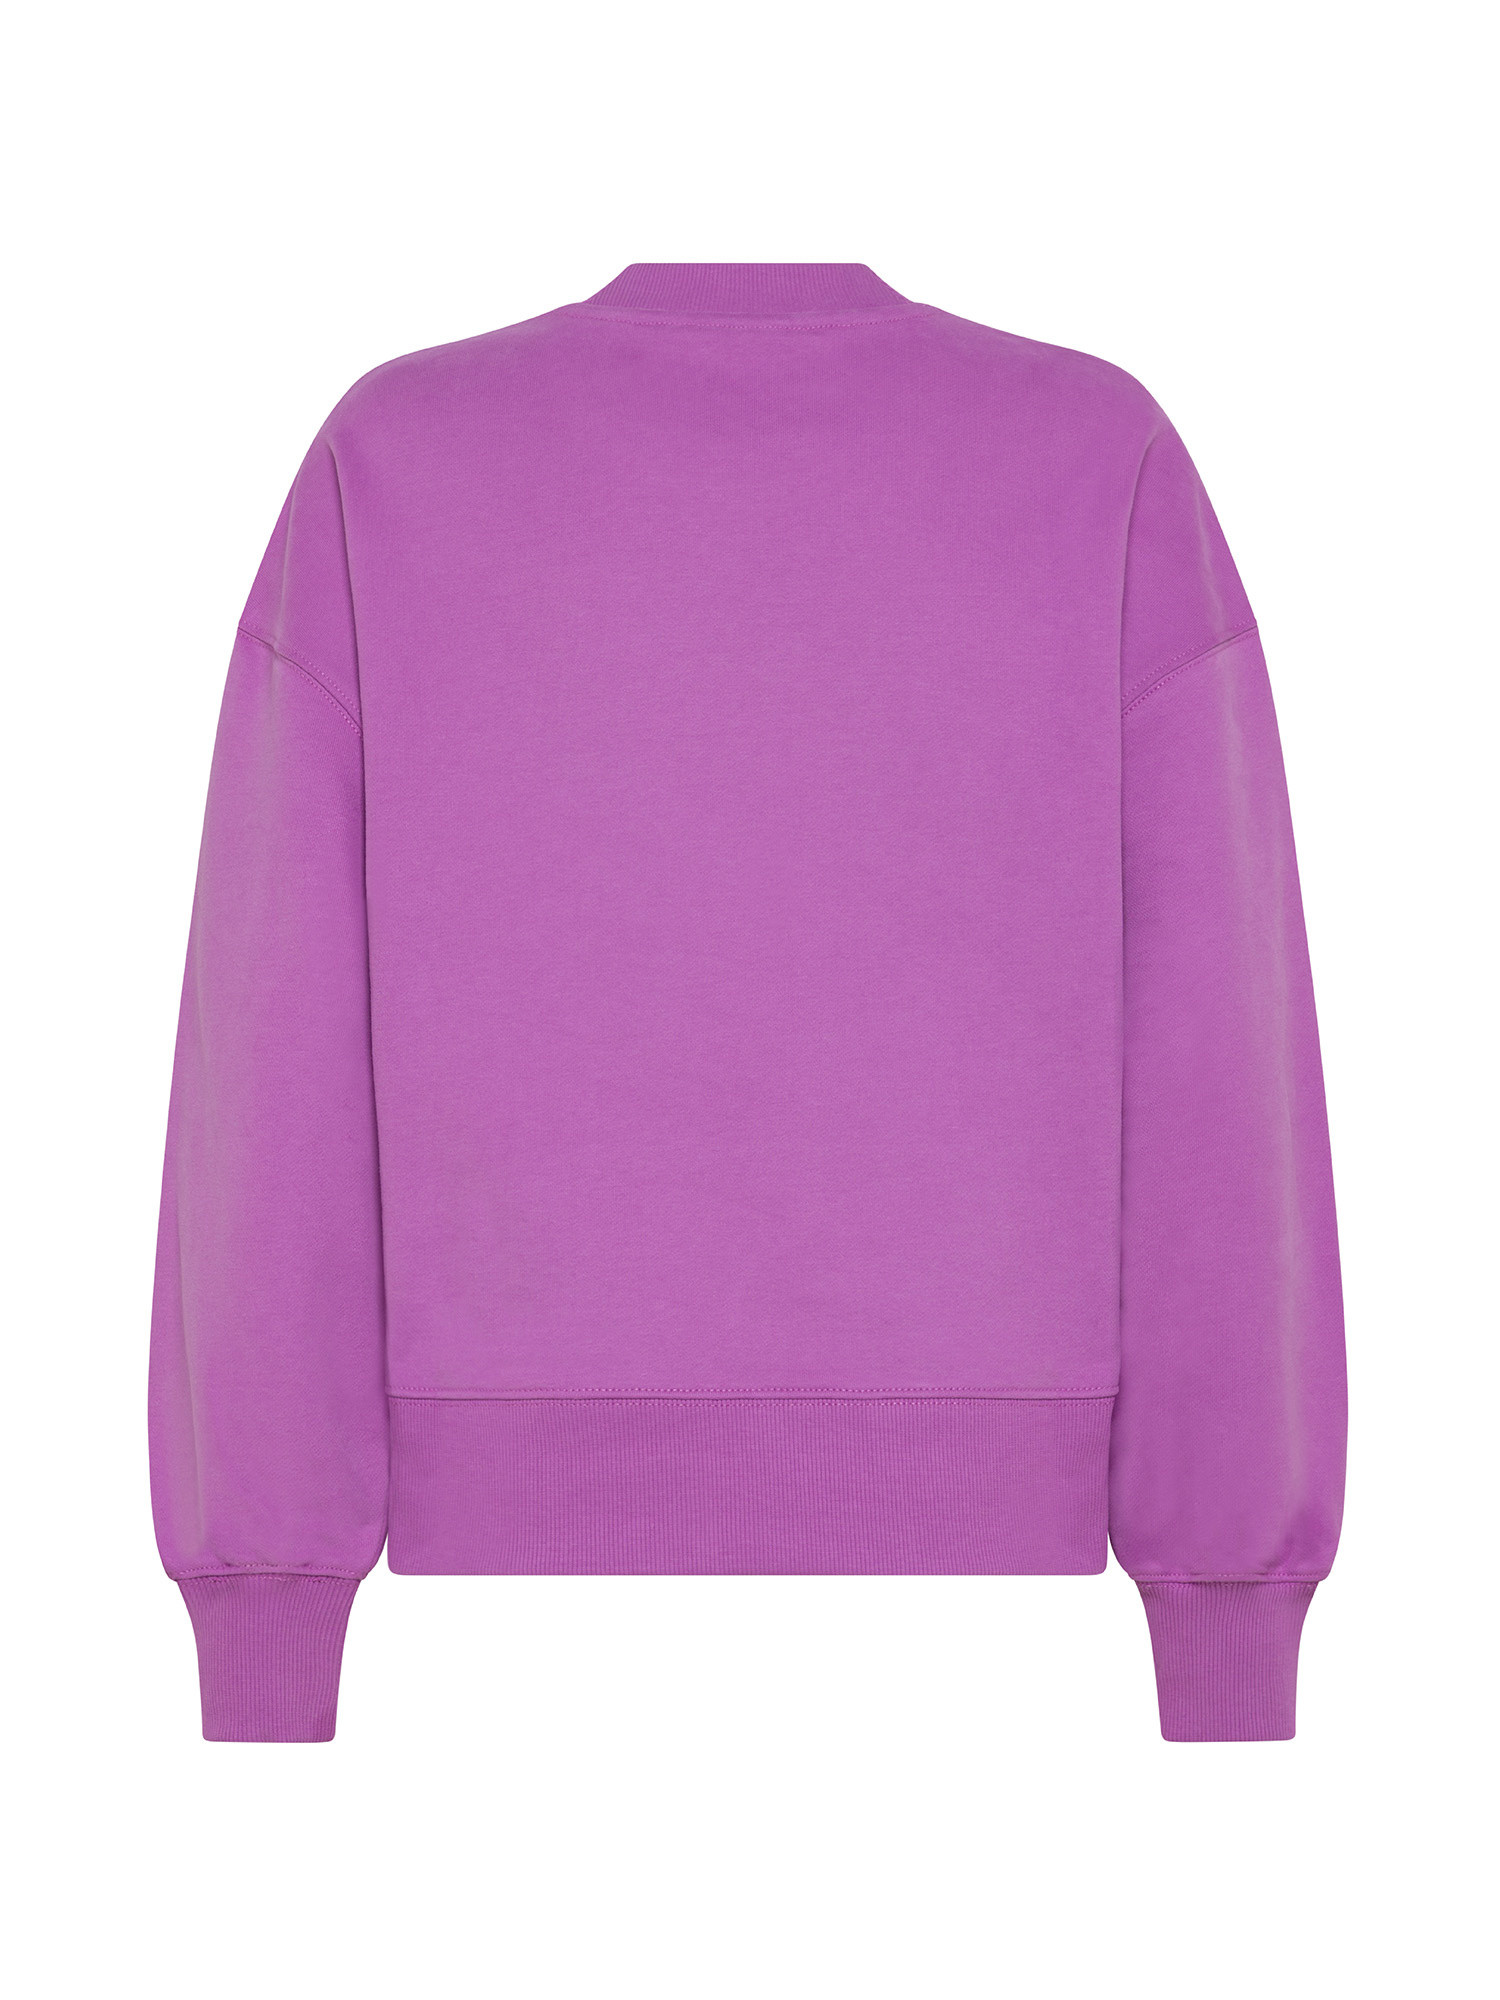 Calvin Klein Jeans - Cotton sweatshirt with logo, Purple, large image number 1